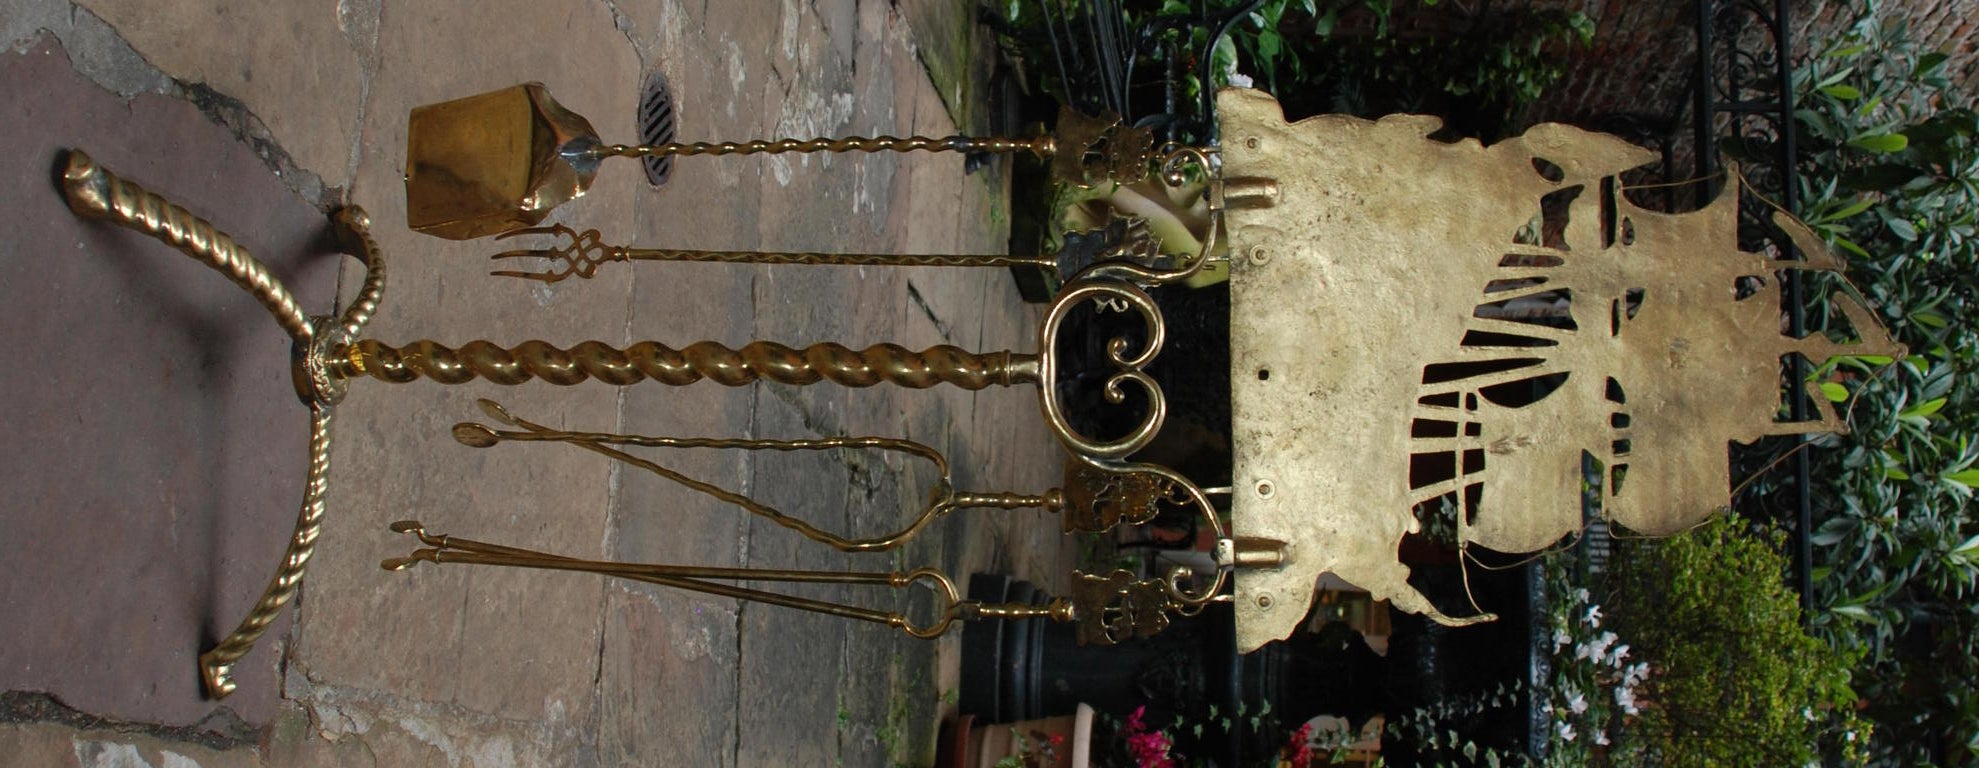 Antique Brass Firetool Set, c.1890's 2